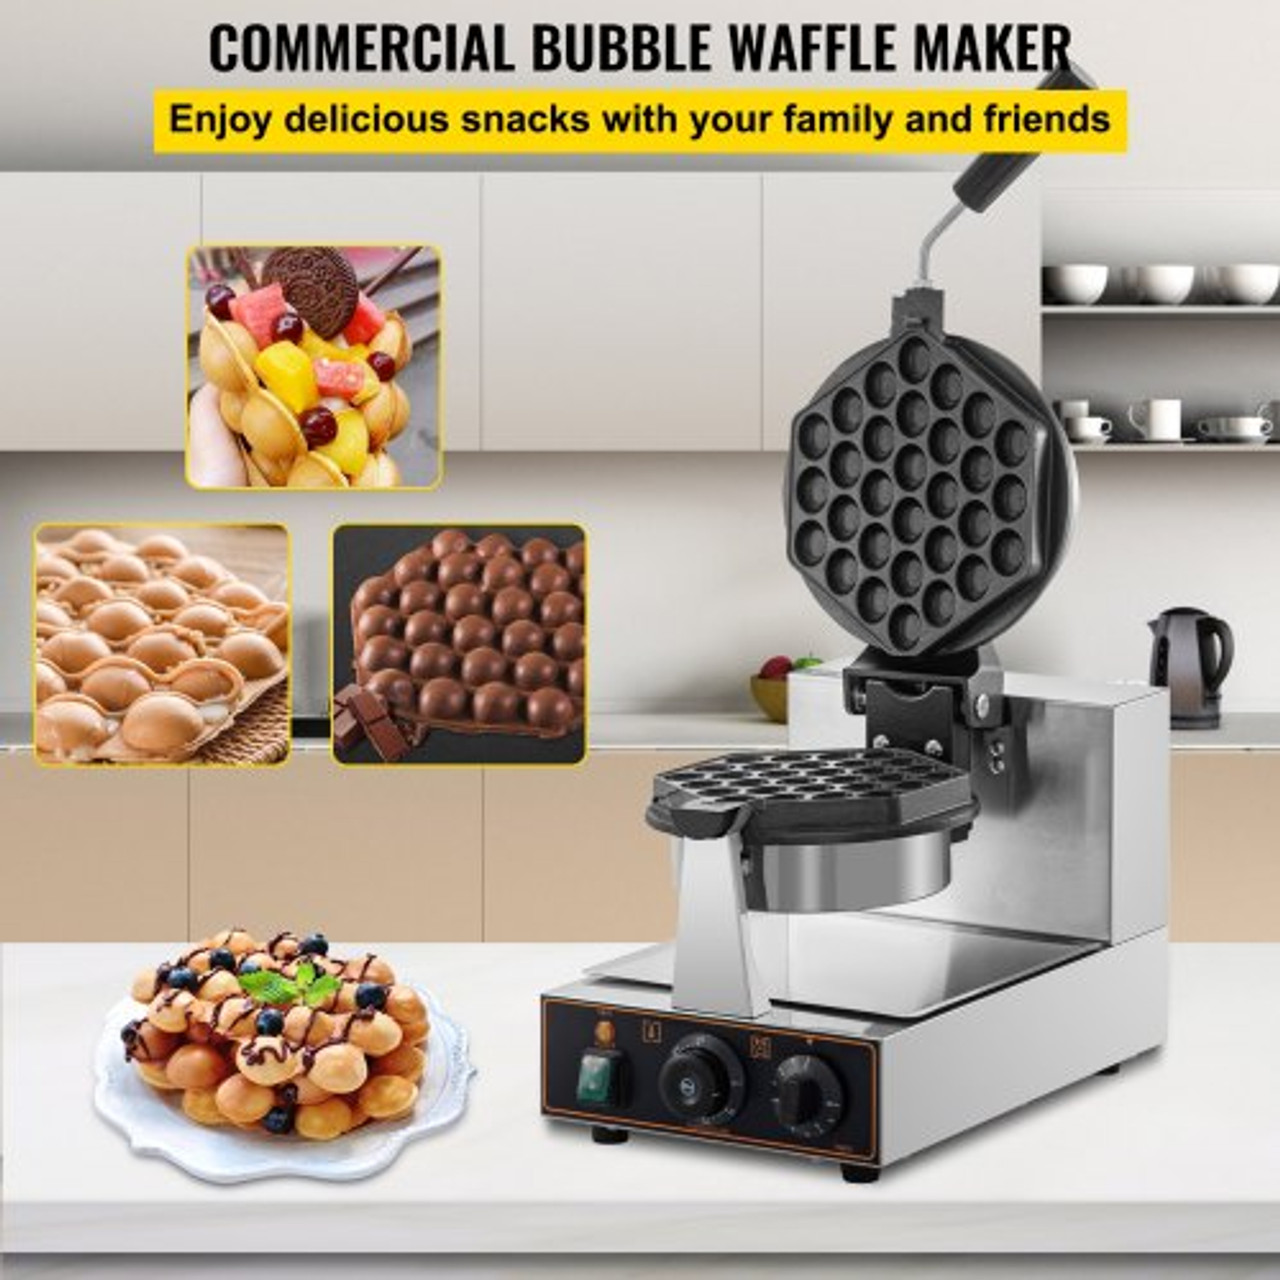 Commercial Bubble Waffle Maker, Hexagonal Mould, 1200W Egg Bubble Puff Iron w/ 360øRotatable 2 Pans & Bent Handles, Stainless Steel Baker w/ Non-Stick Teflon Coating, 50-300?/122-572? Adjustable